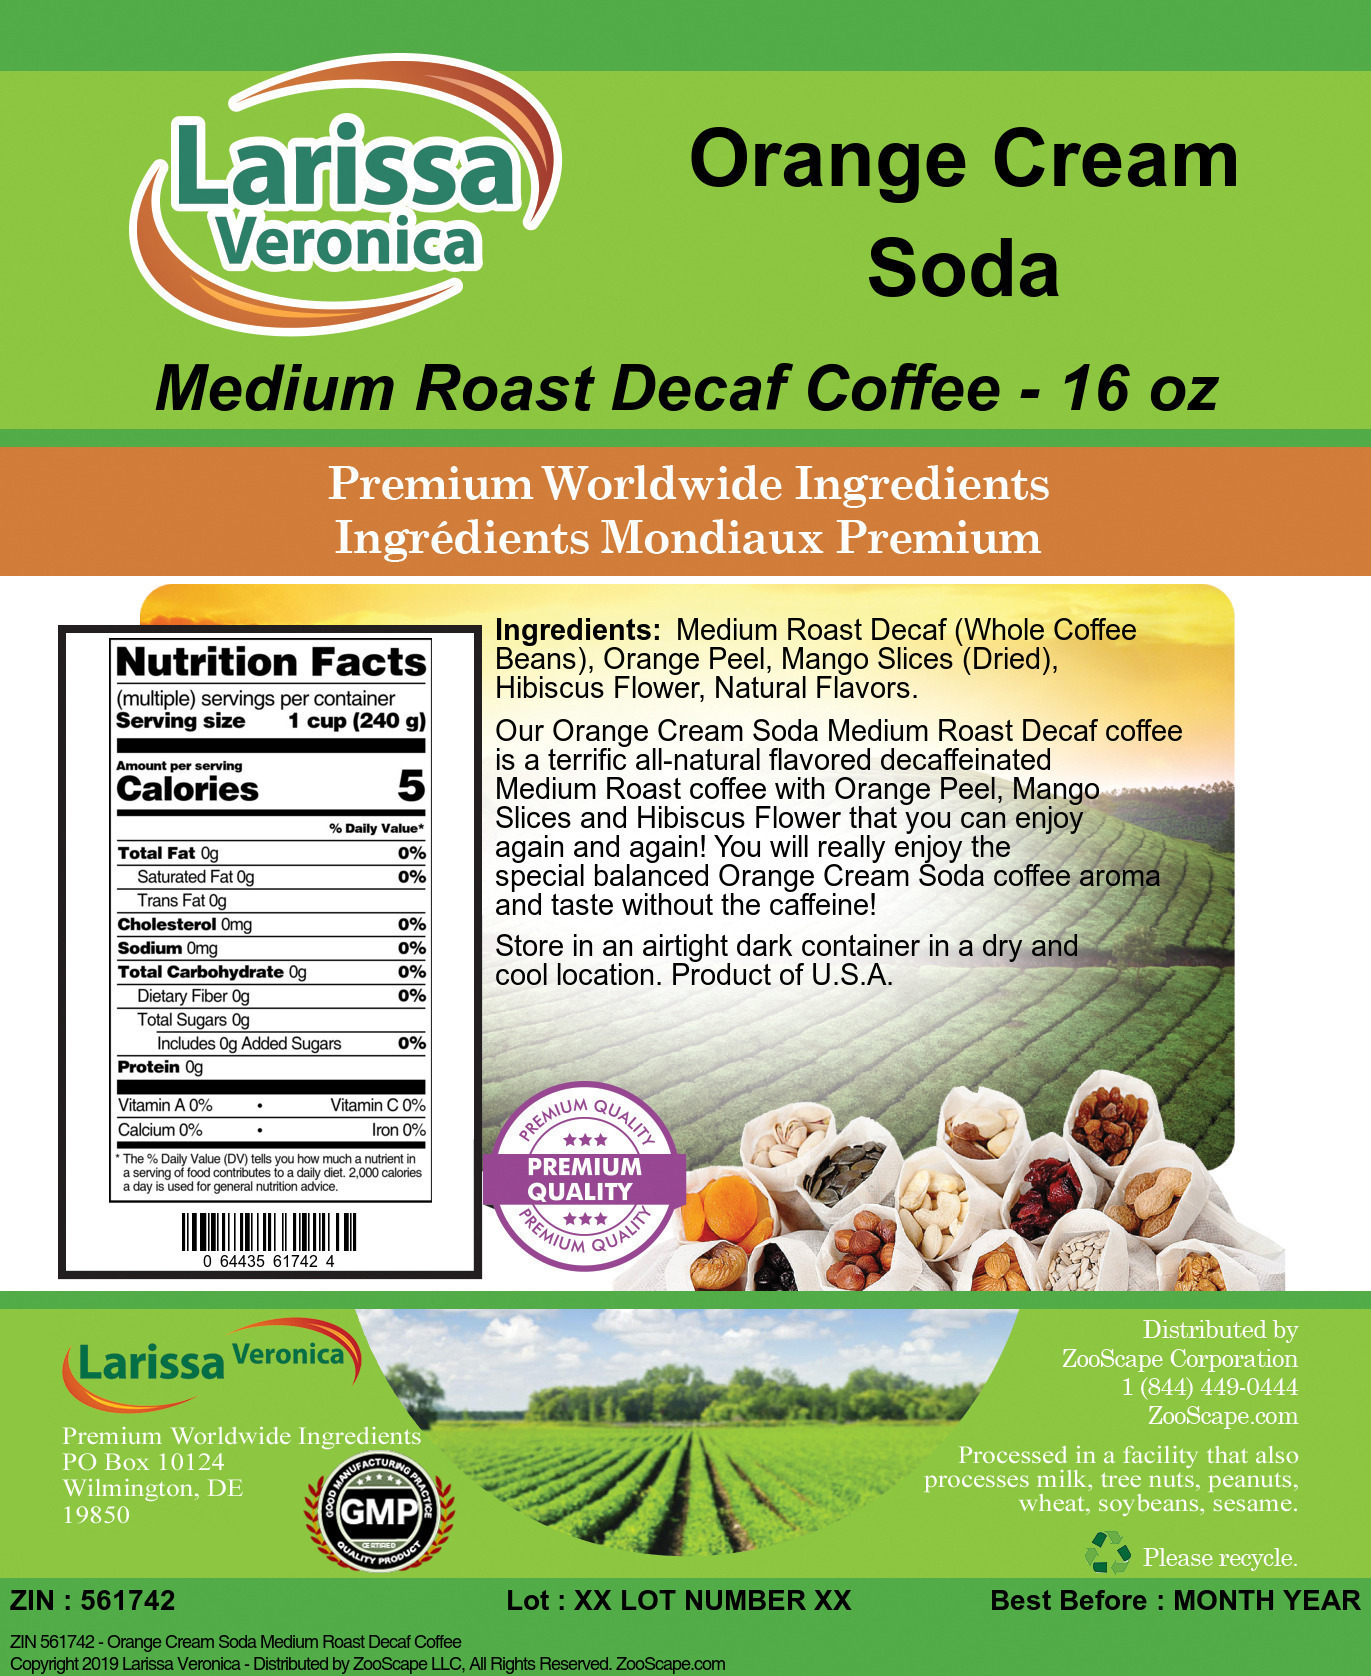 Orange Cream Soda Medium Roast Decaf Coffee - Label